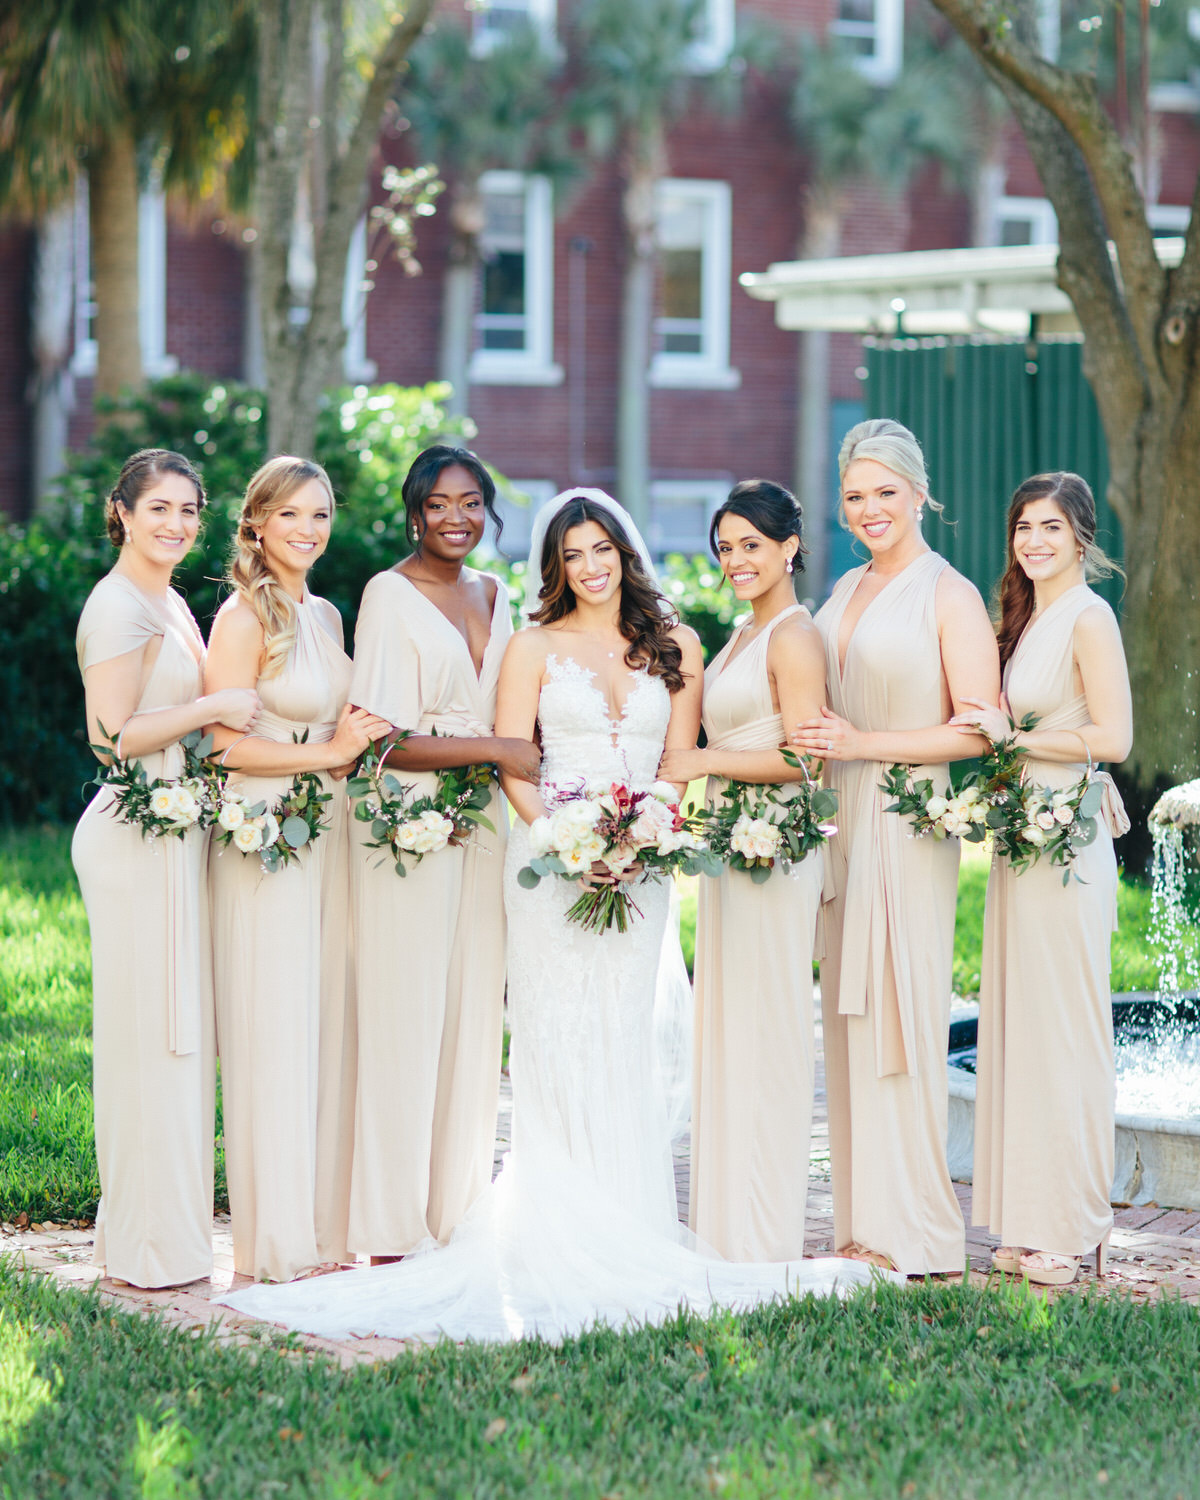 Outdoor bride with bridesmaids photos